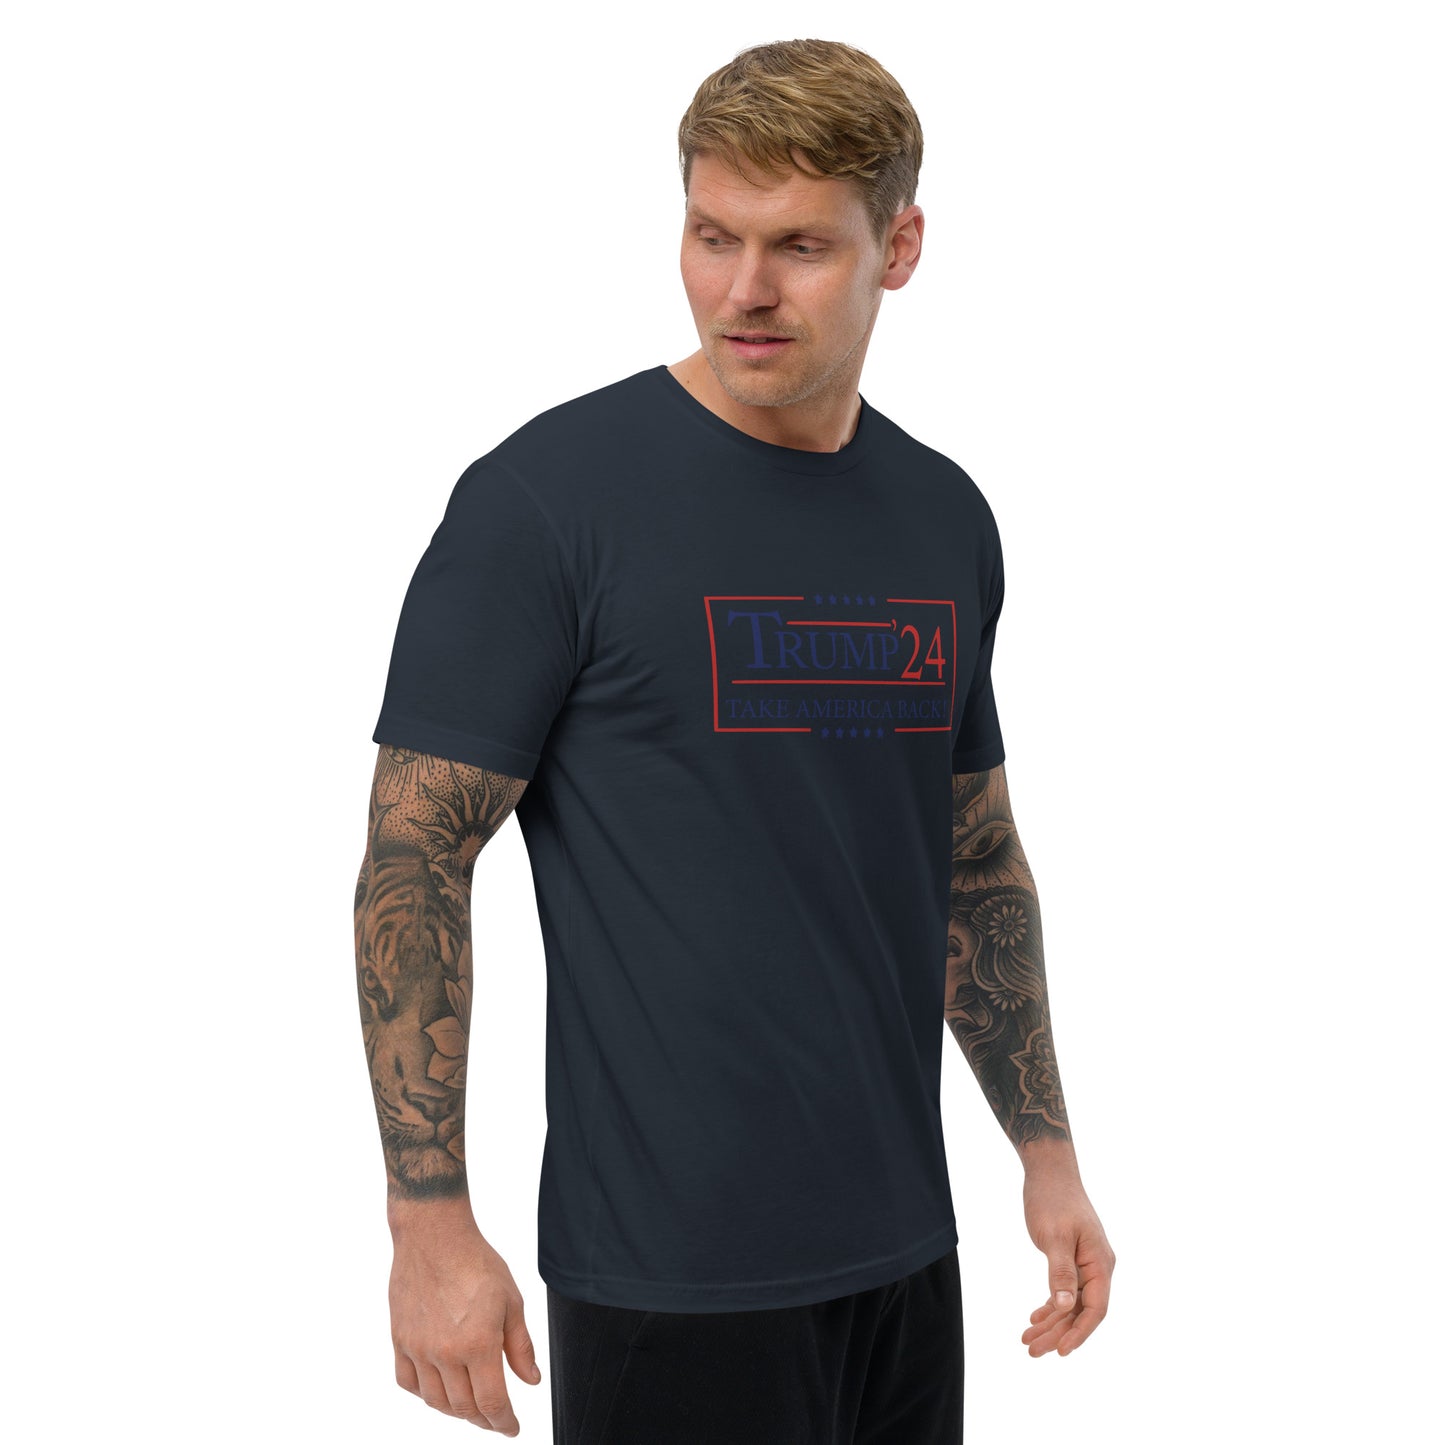 Trump 2024 Short Sleeve T-shirt